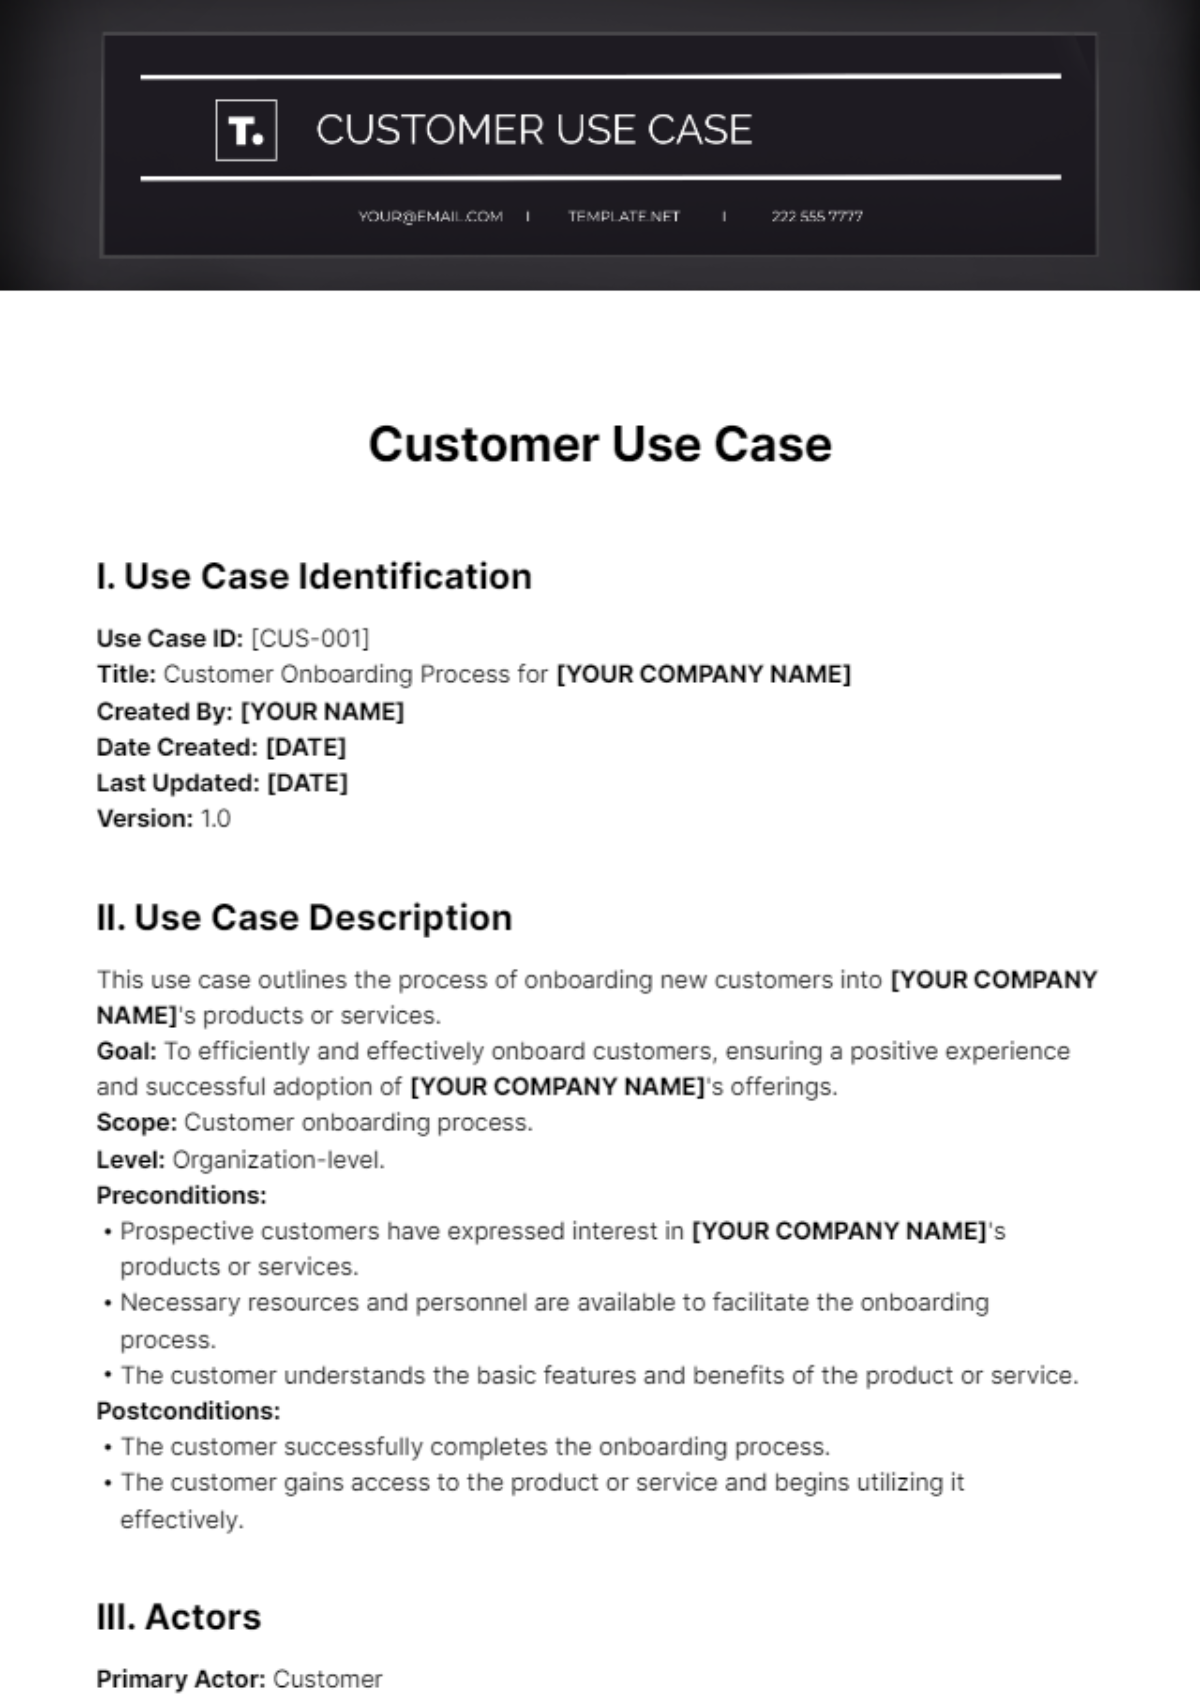 Customer Use Case Template